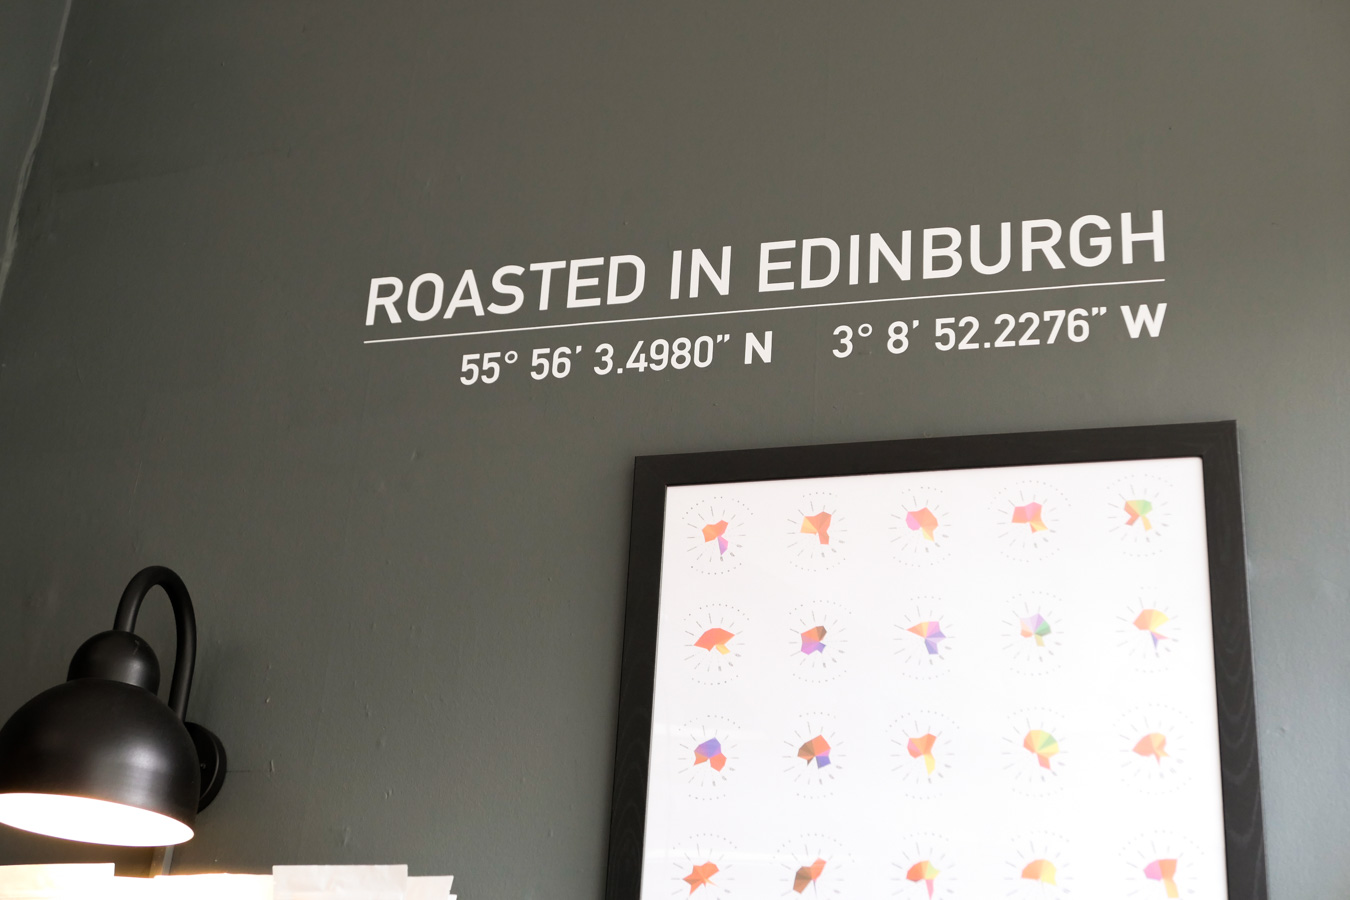 Best Stockbridge Edinburgh Restaurants Travel Guide - Artisan Coffee Roasters - Best Coffee in Edinburgh